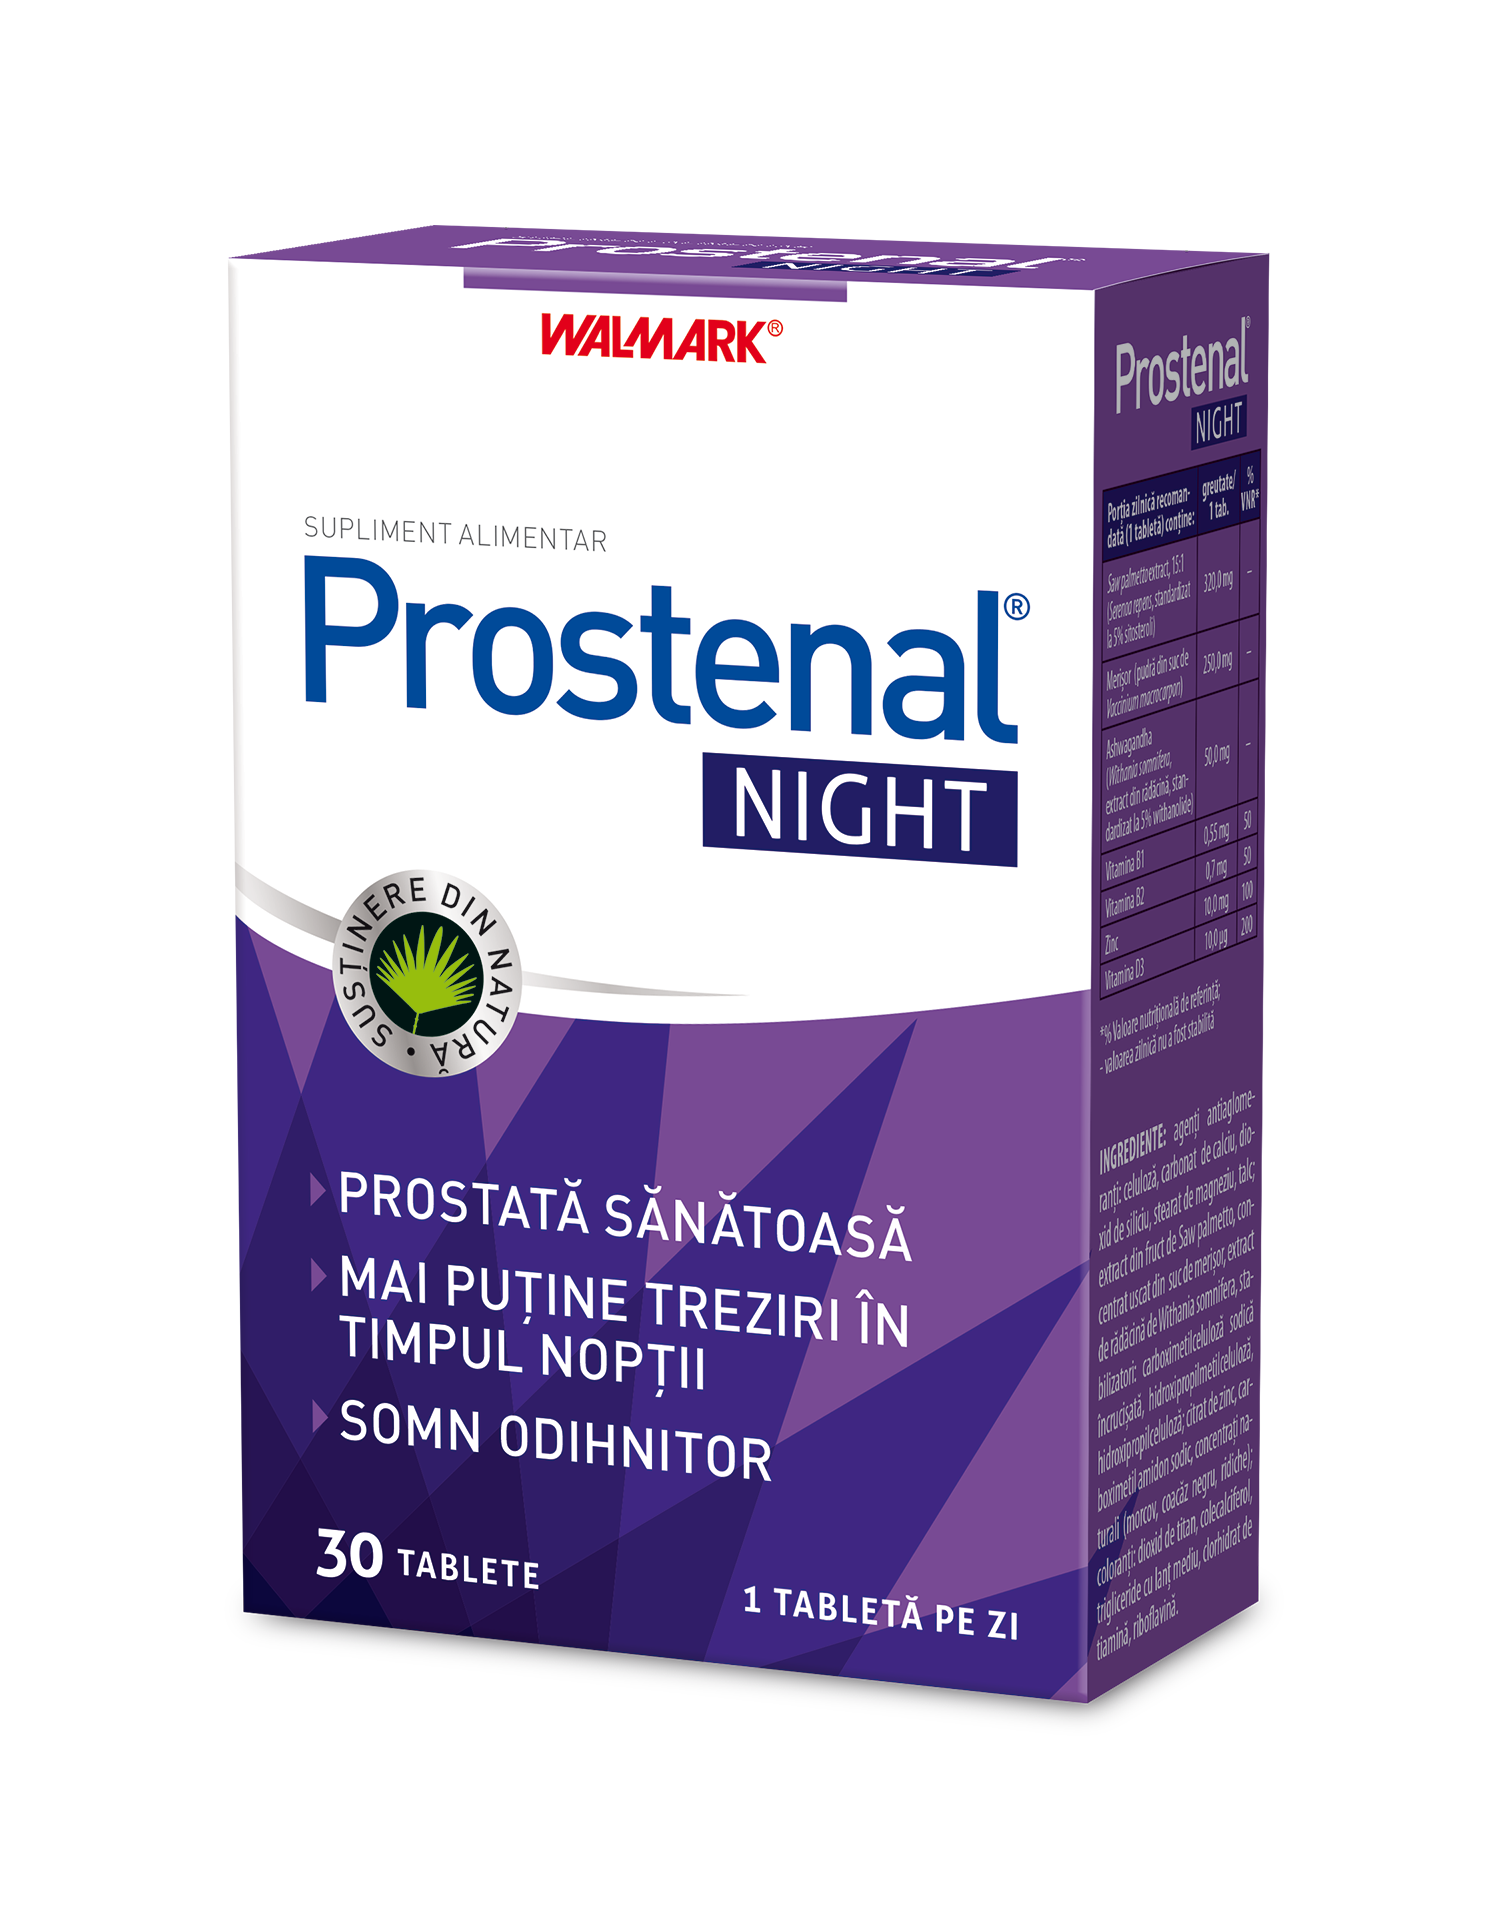 W Prostenal Night, 60 tablete | Catena | Preturi mici!